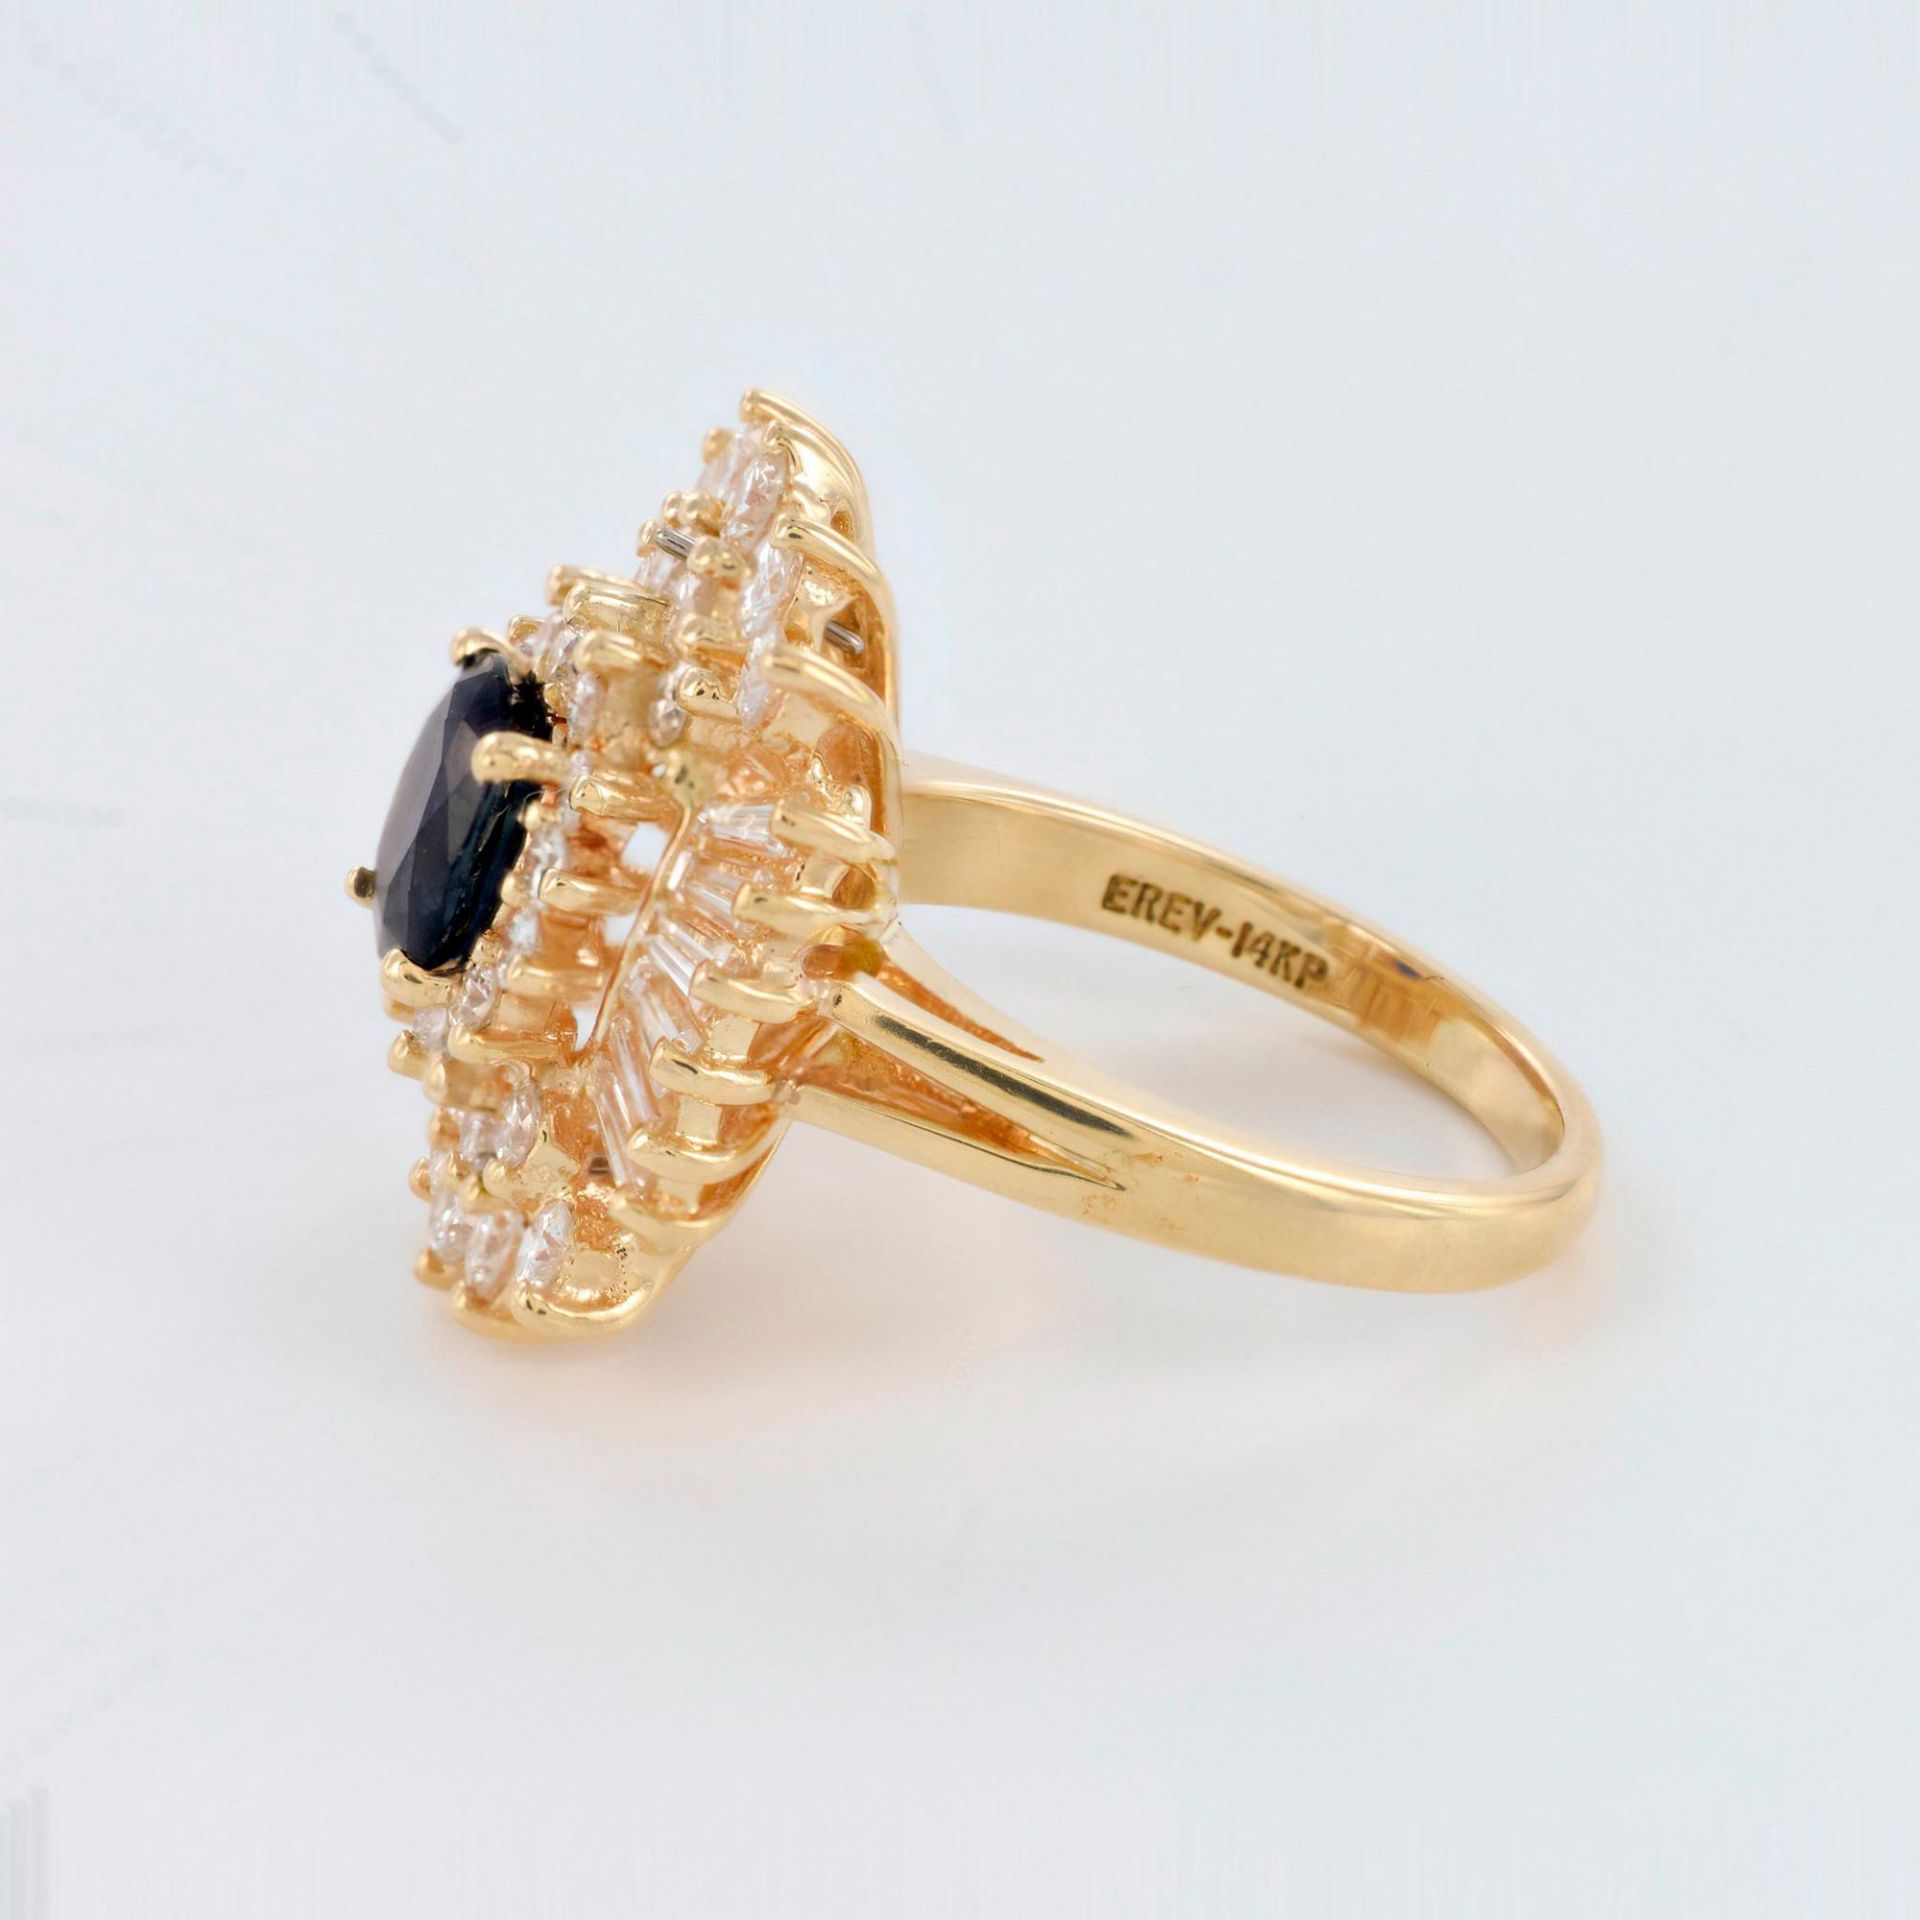 Harold Freeman 14K Yellow Gold, Sapphire, and Diamond Ring - Image 6 of 6